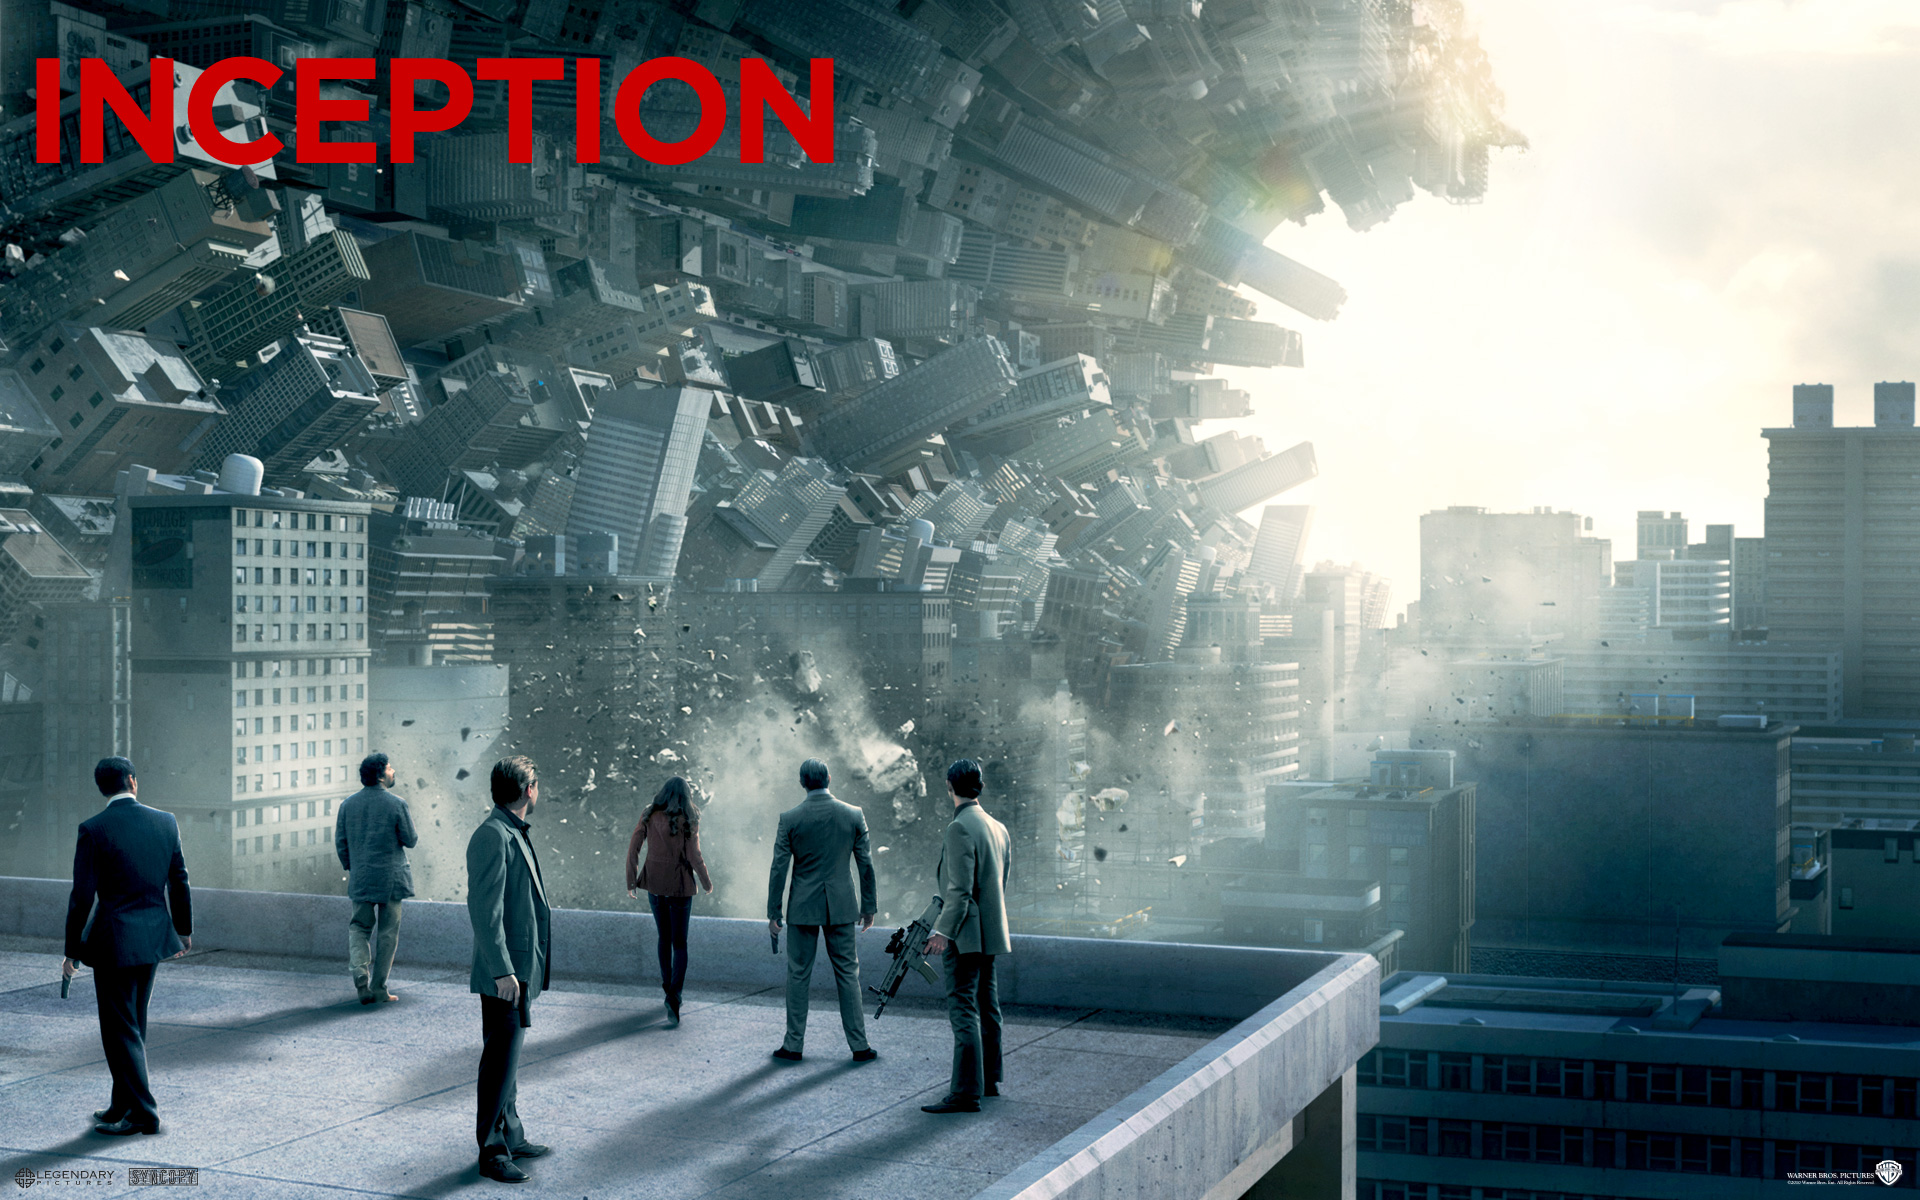 Inception: A True Story?